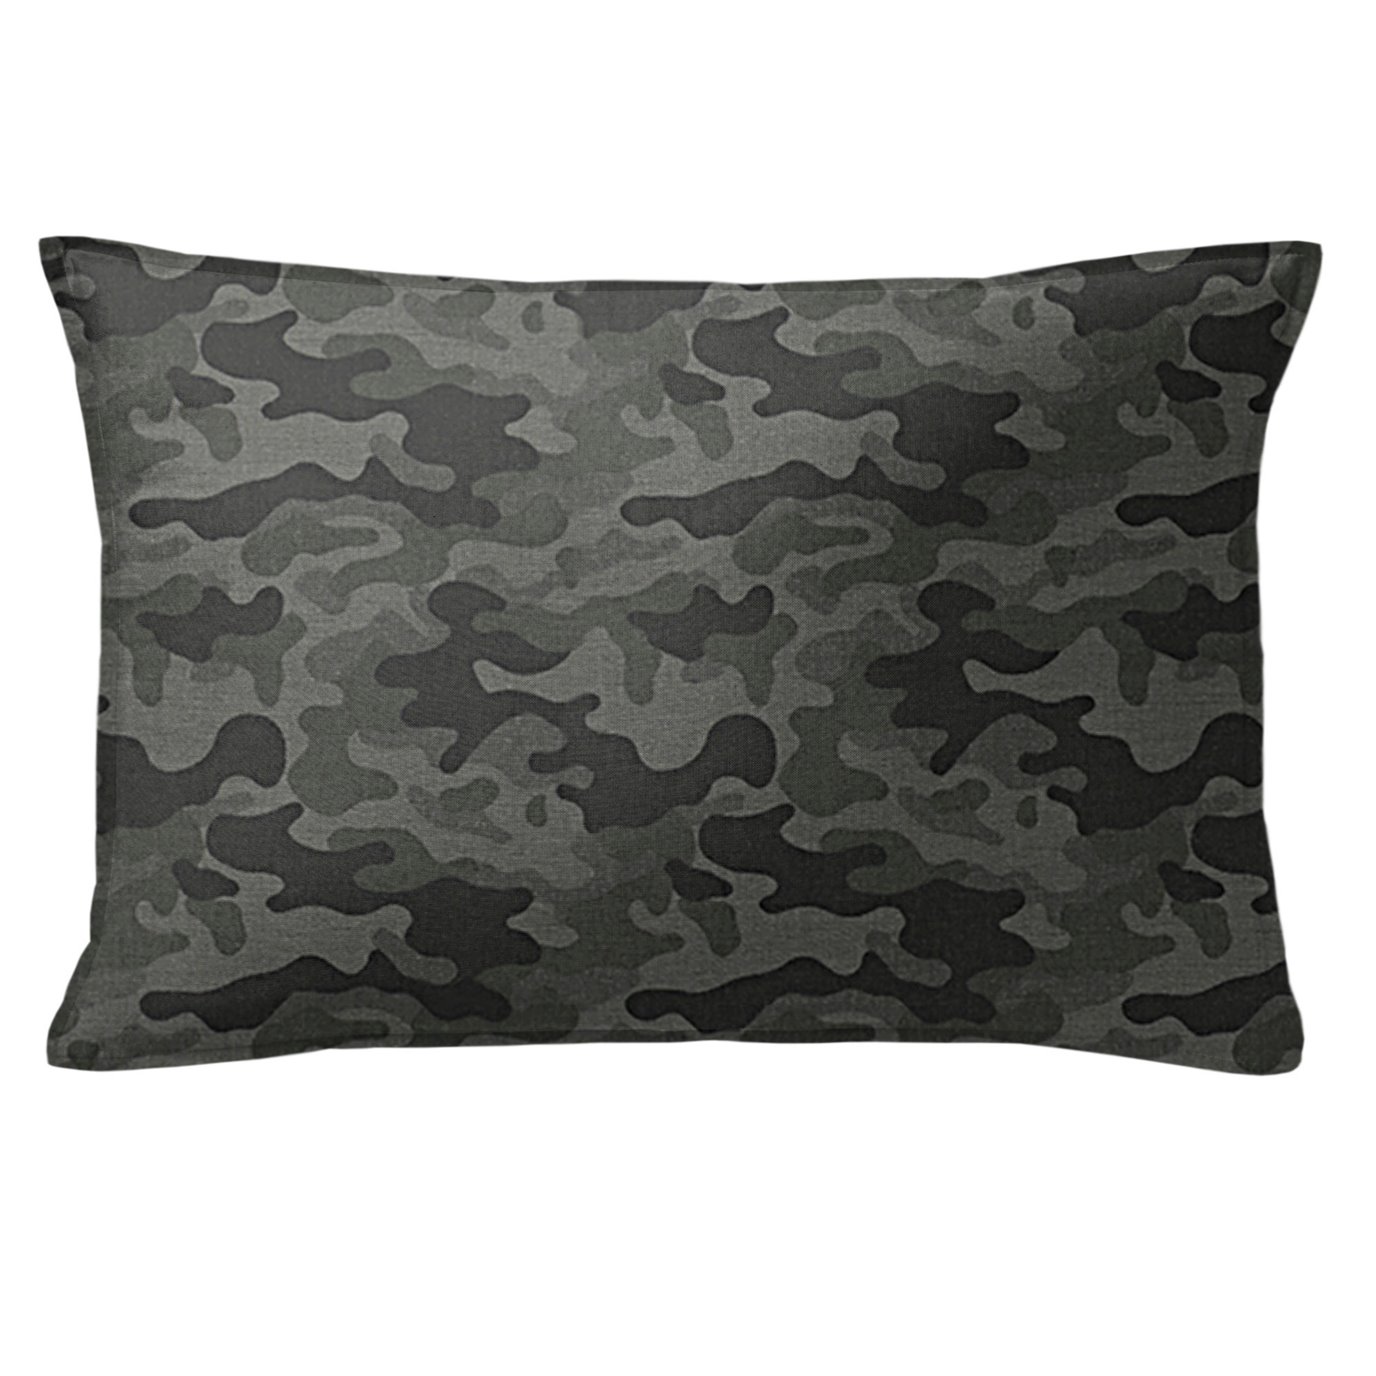 Basic Camo Army Green Decorative Pillow - Size 14"x20" Rectangle